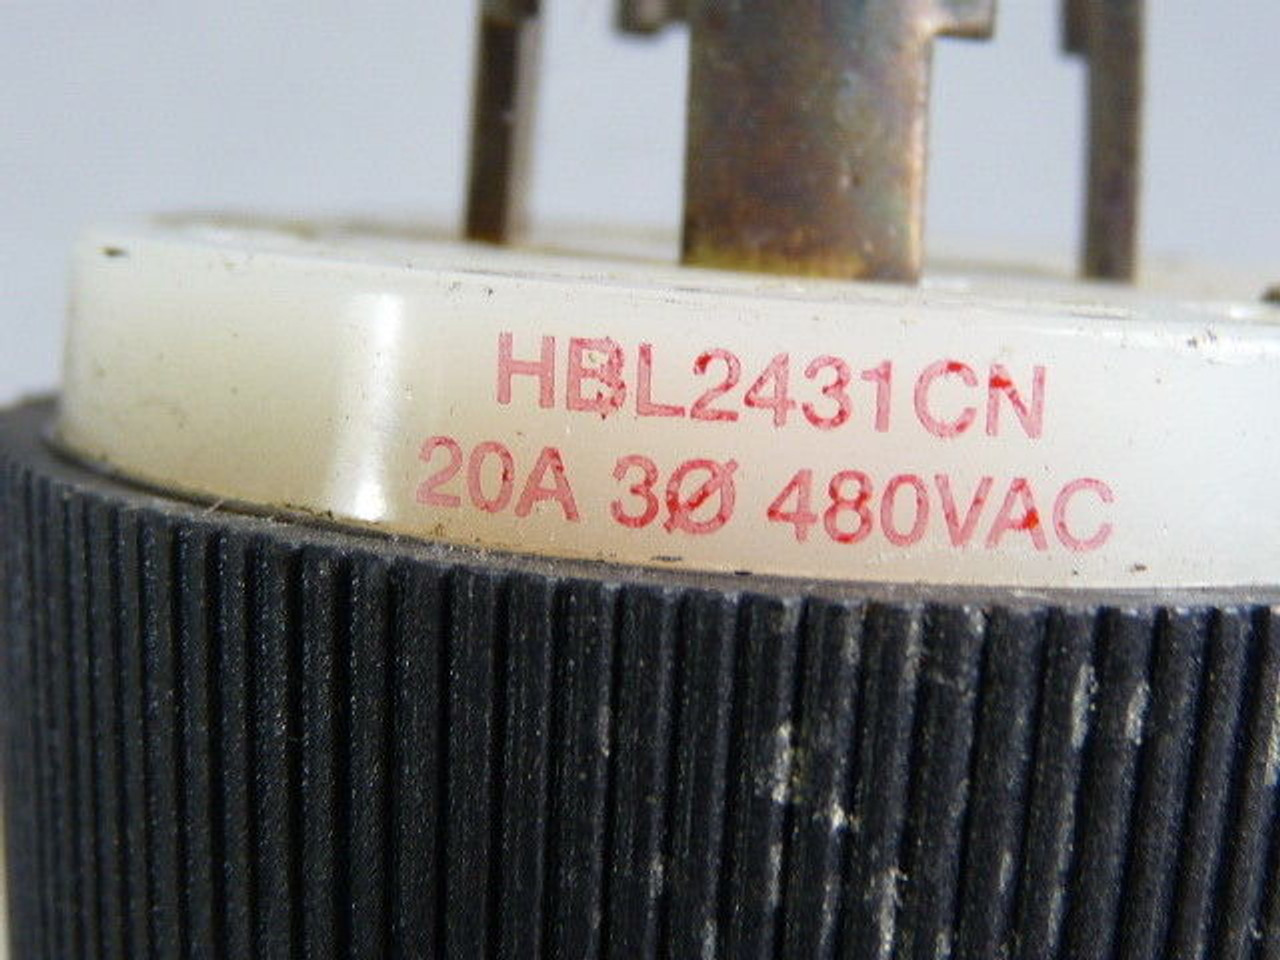 Hubbell HBL2431CN Plug 20A 480VAC 4W 3P USED